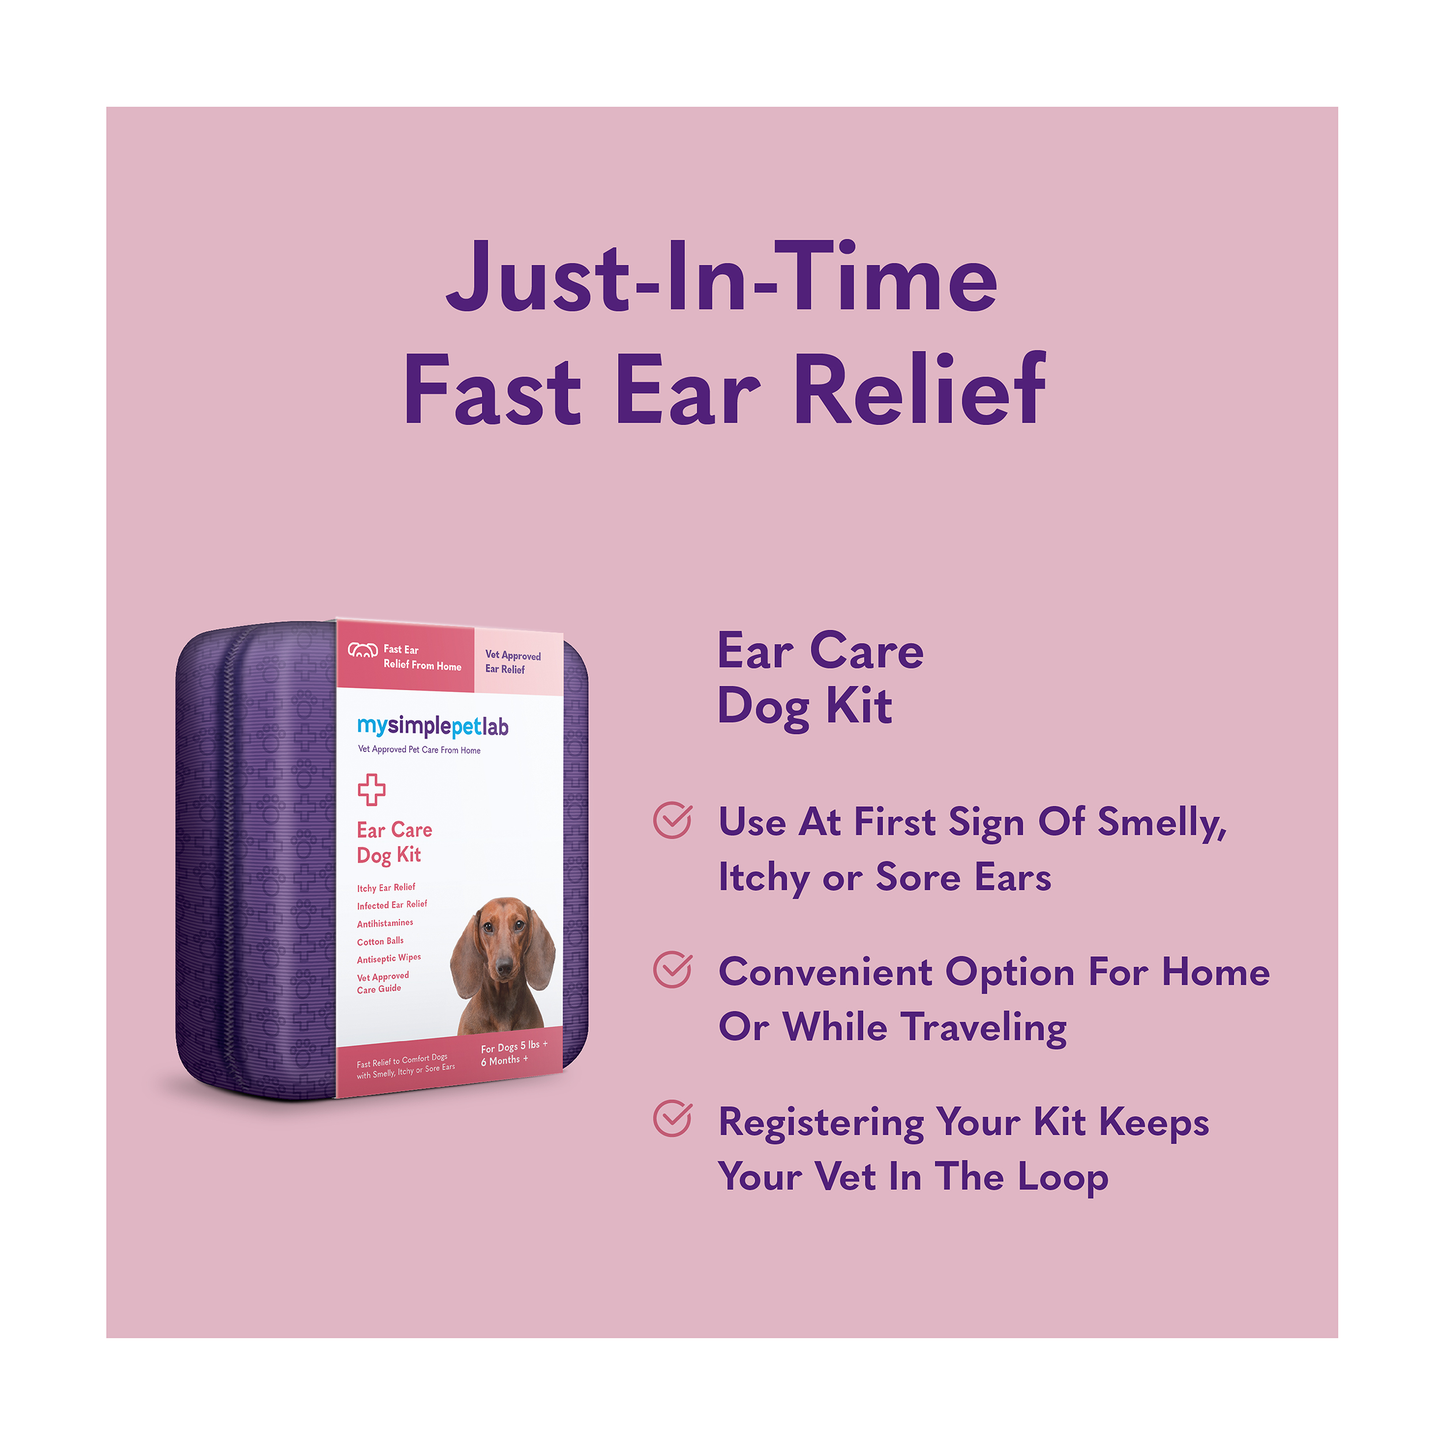 Ear Care Dog Kit